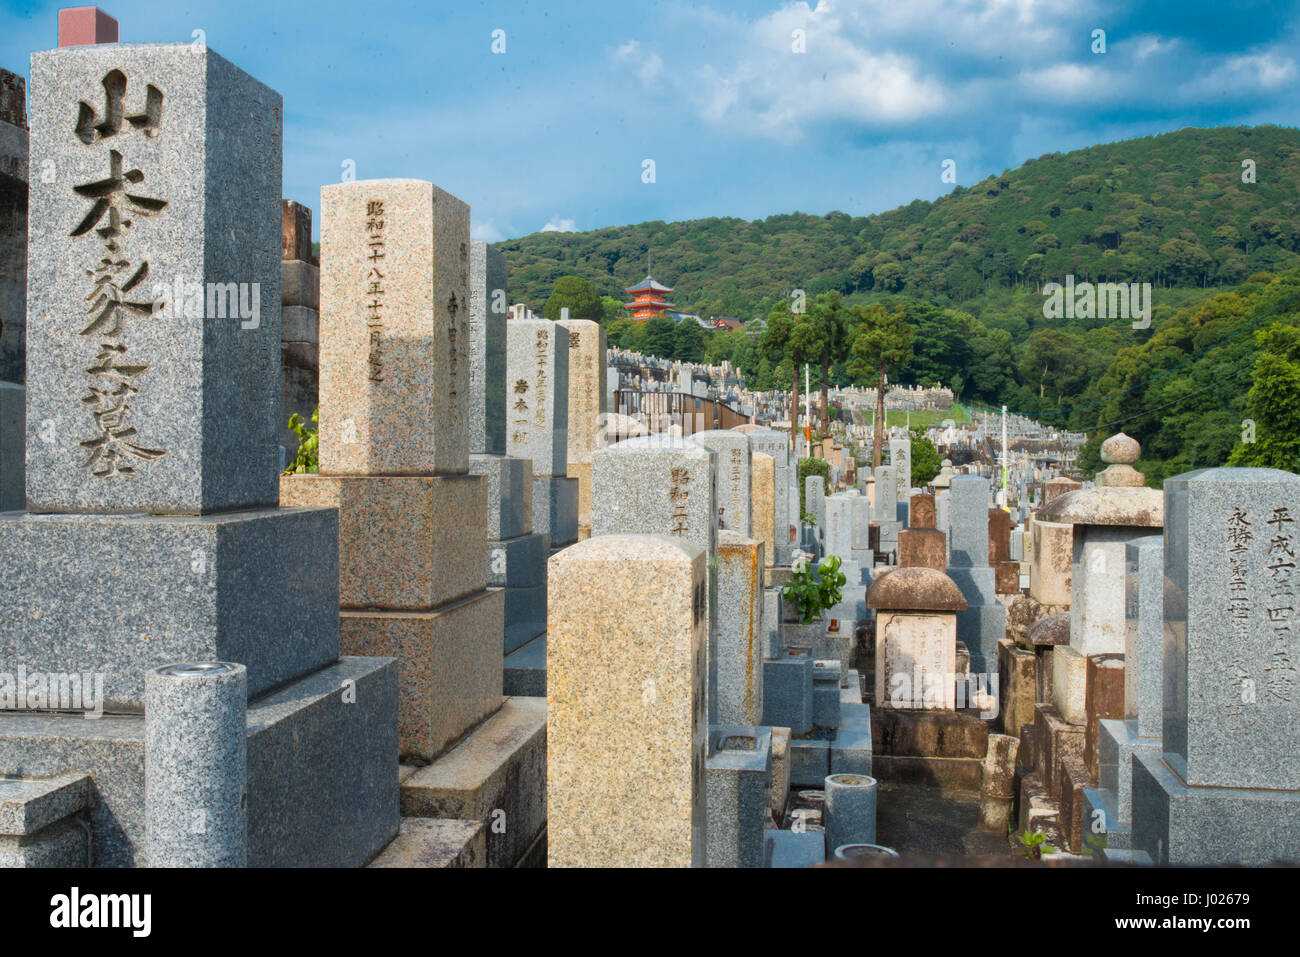 Nishi Otani cemetery  in Kyoto, Japan Stock Photo